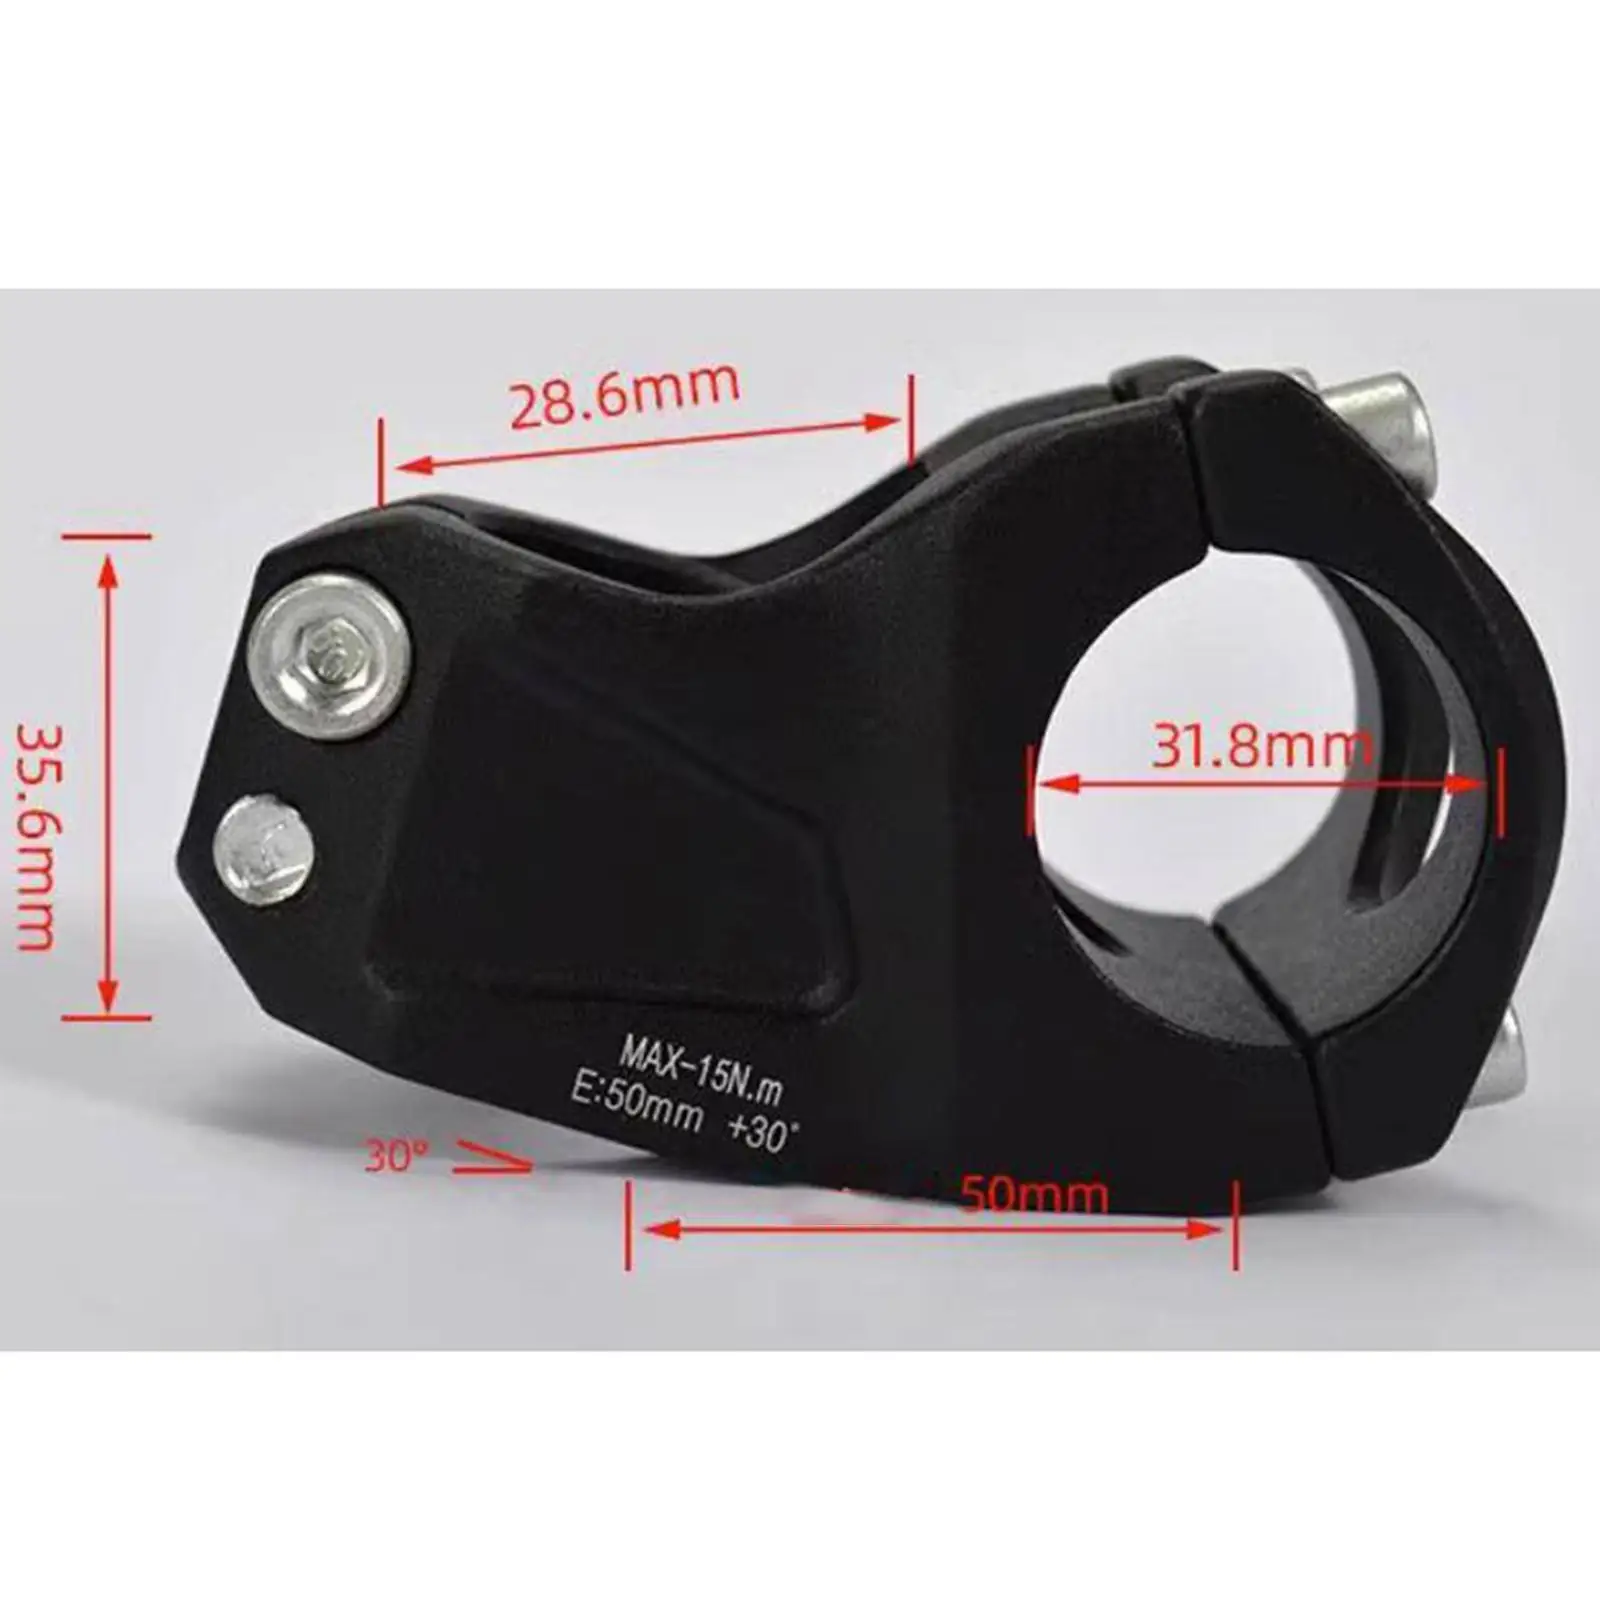 Bike Short Stem, Bicycle Stem Premium Adjustable, Stem Riser 31.8mm Handlebar Stem, for Cycling Accessories